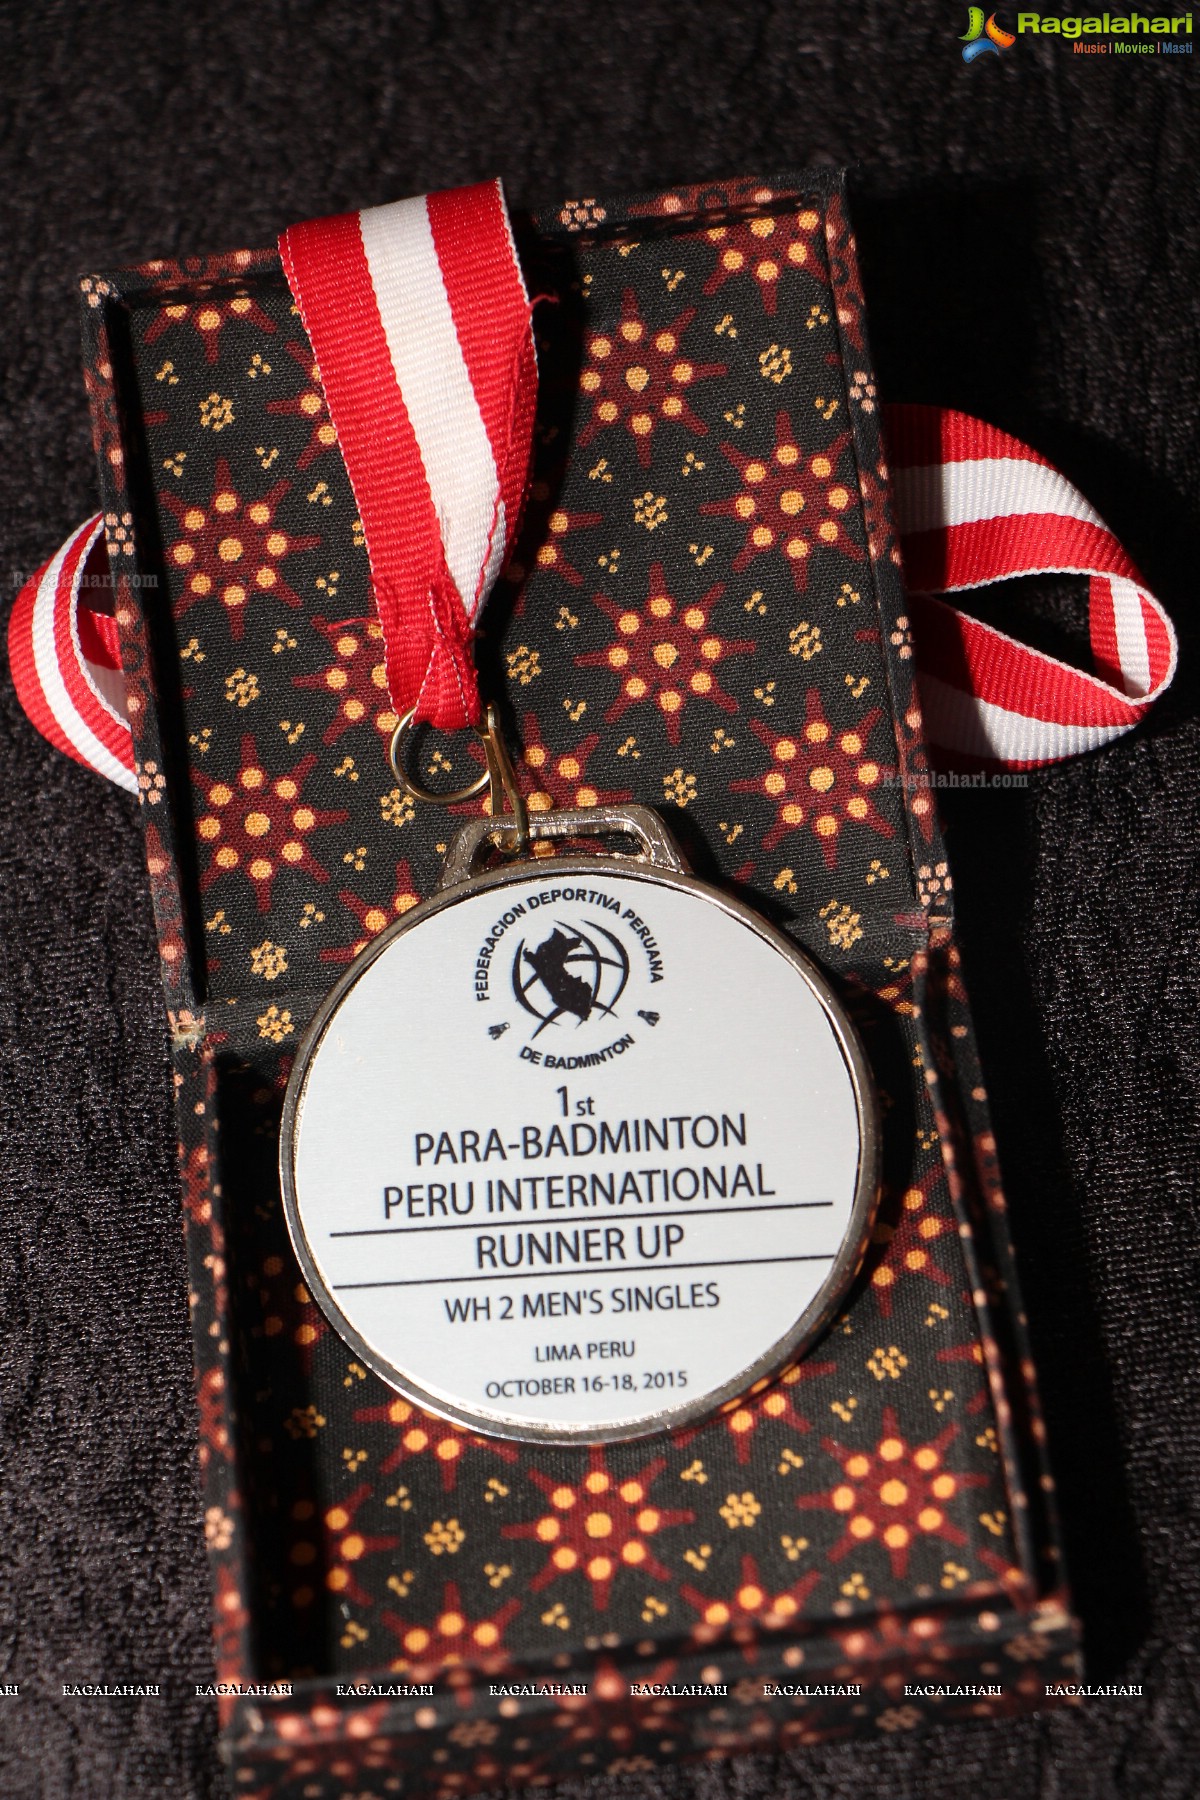 Lakshmi Manchu felicitates Peru Para-Badminton Championship Medal Winning Para-Athletes Anand and Girish from Aditya Mehta Foundation